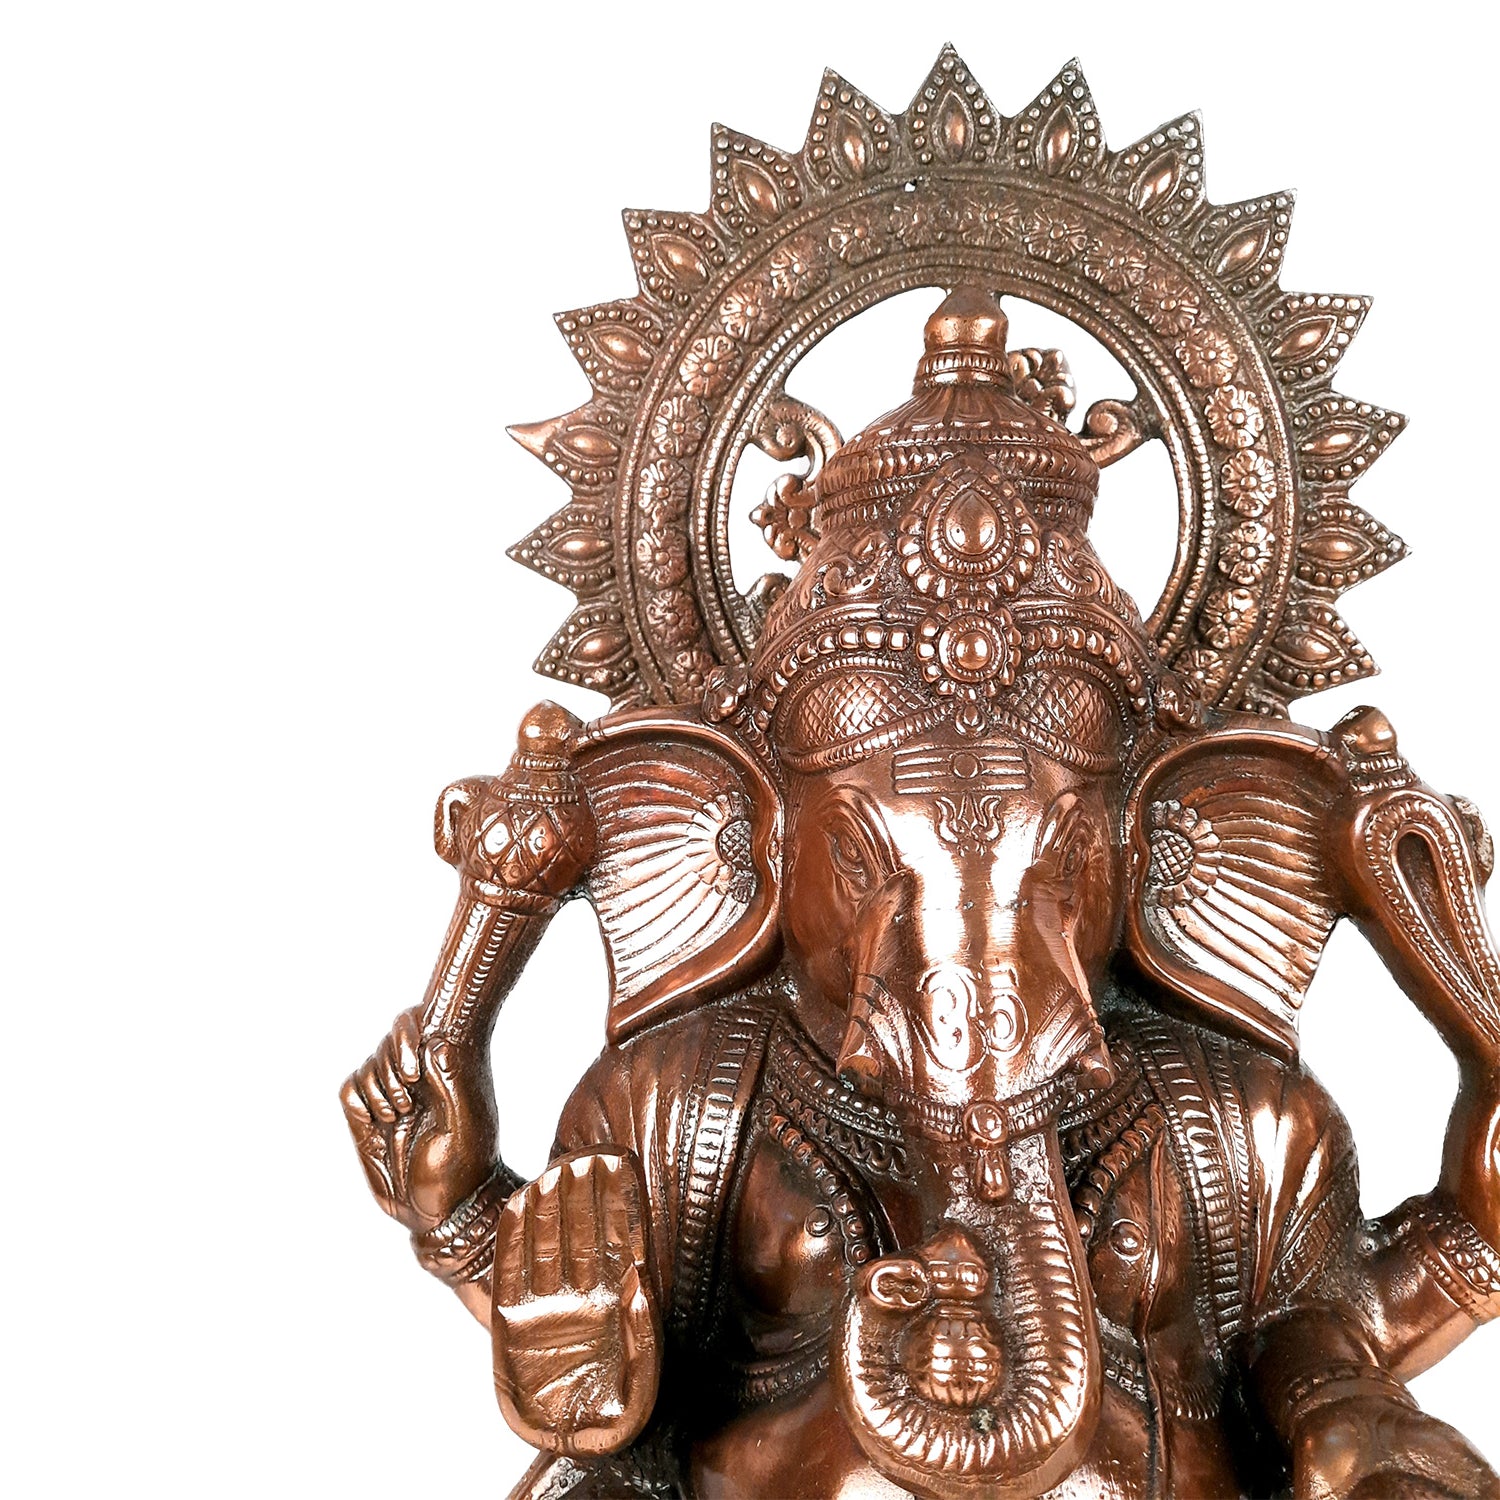 Lord Ganesha Statue | Ganesh Idol for Office & Home decor - 25 Inch-Apkamart